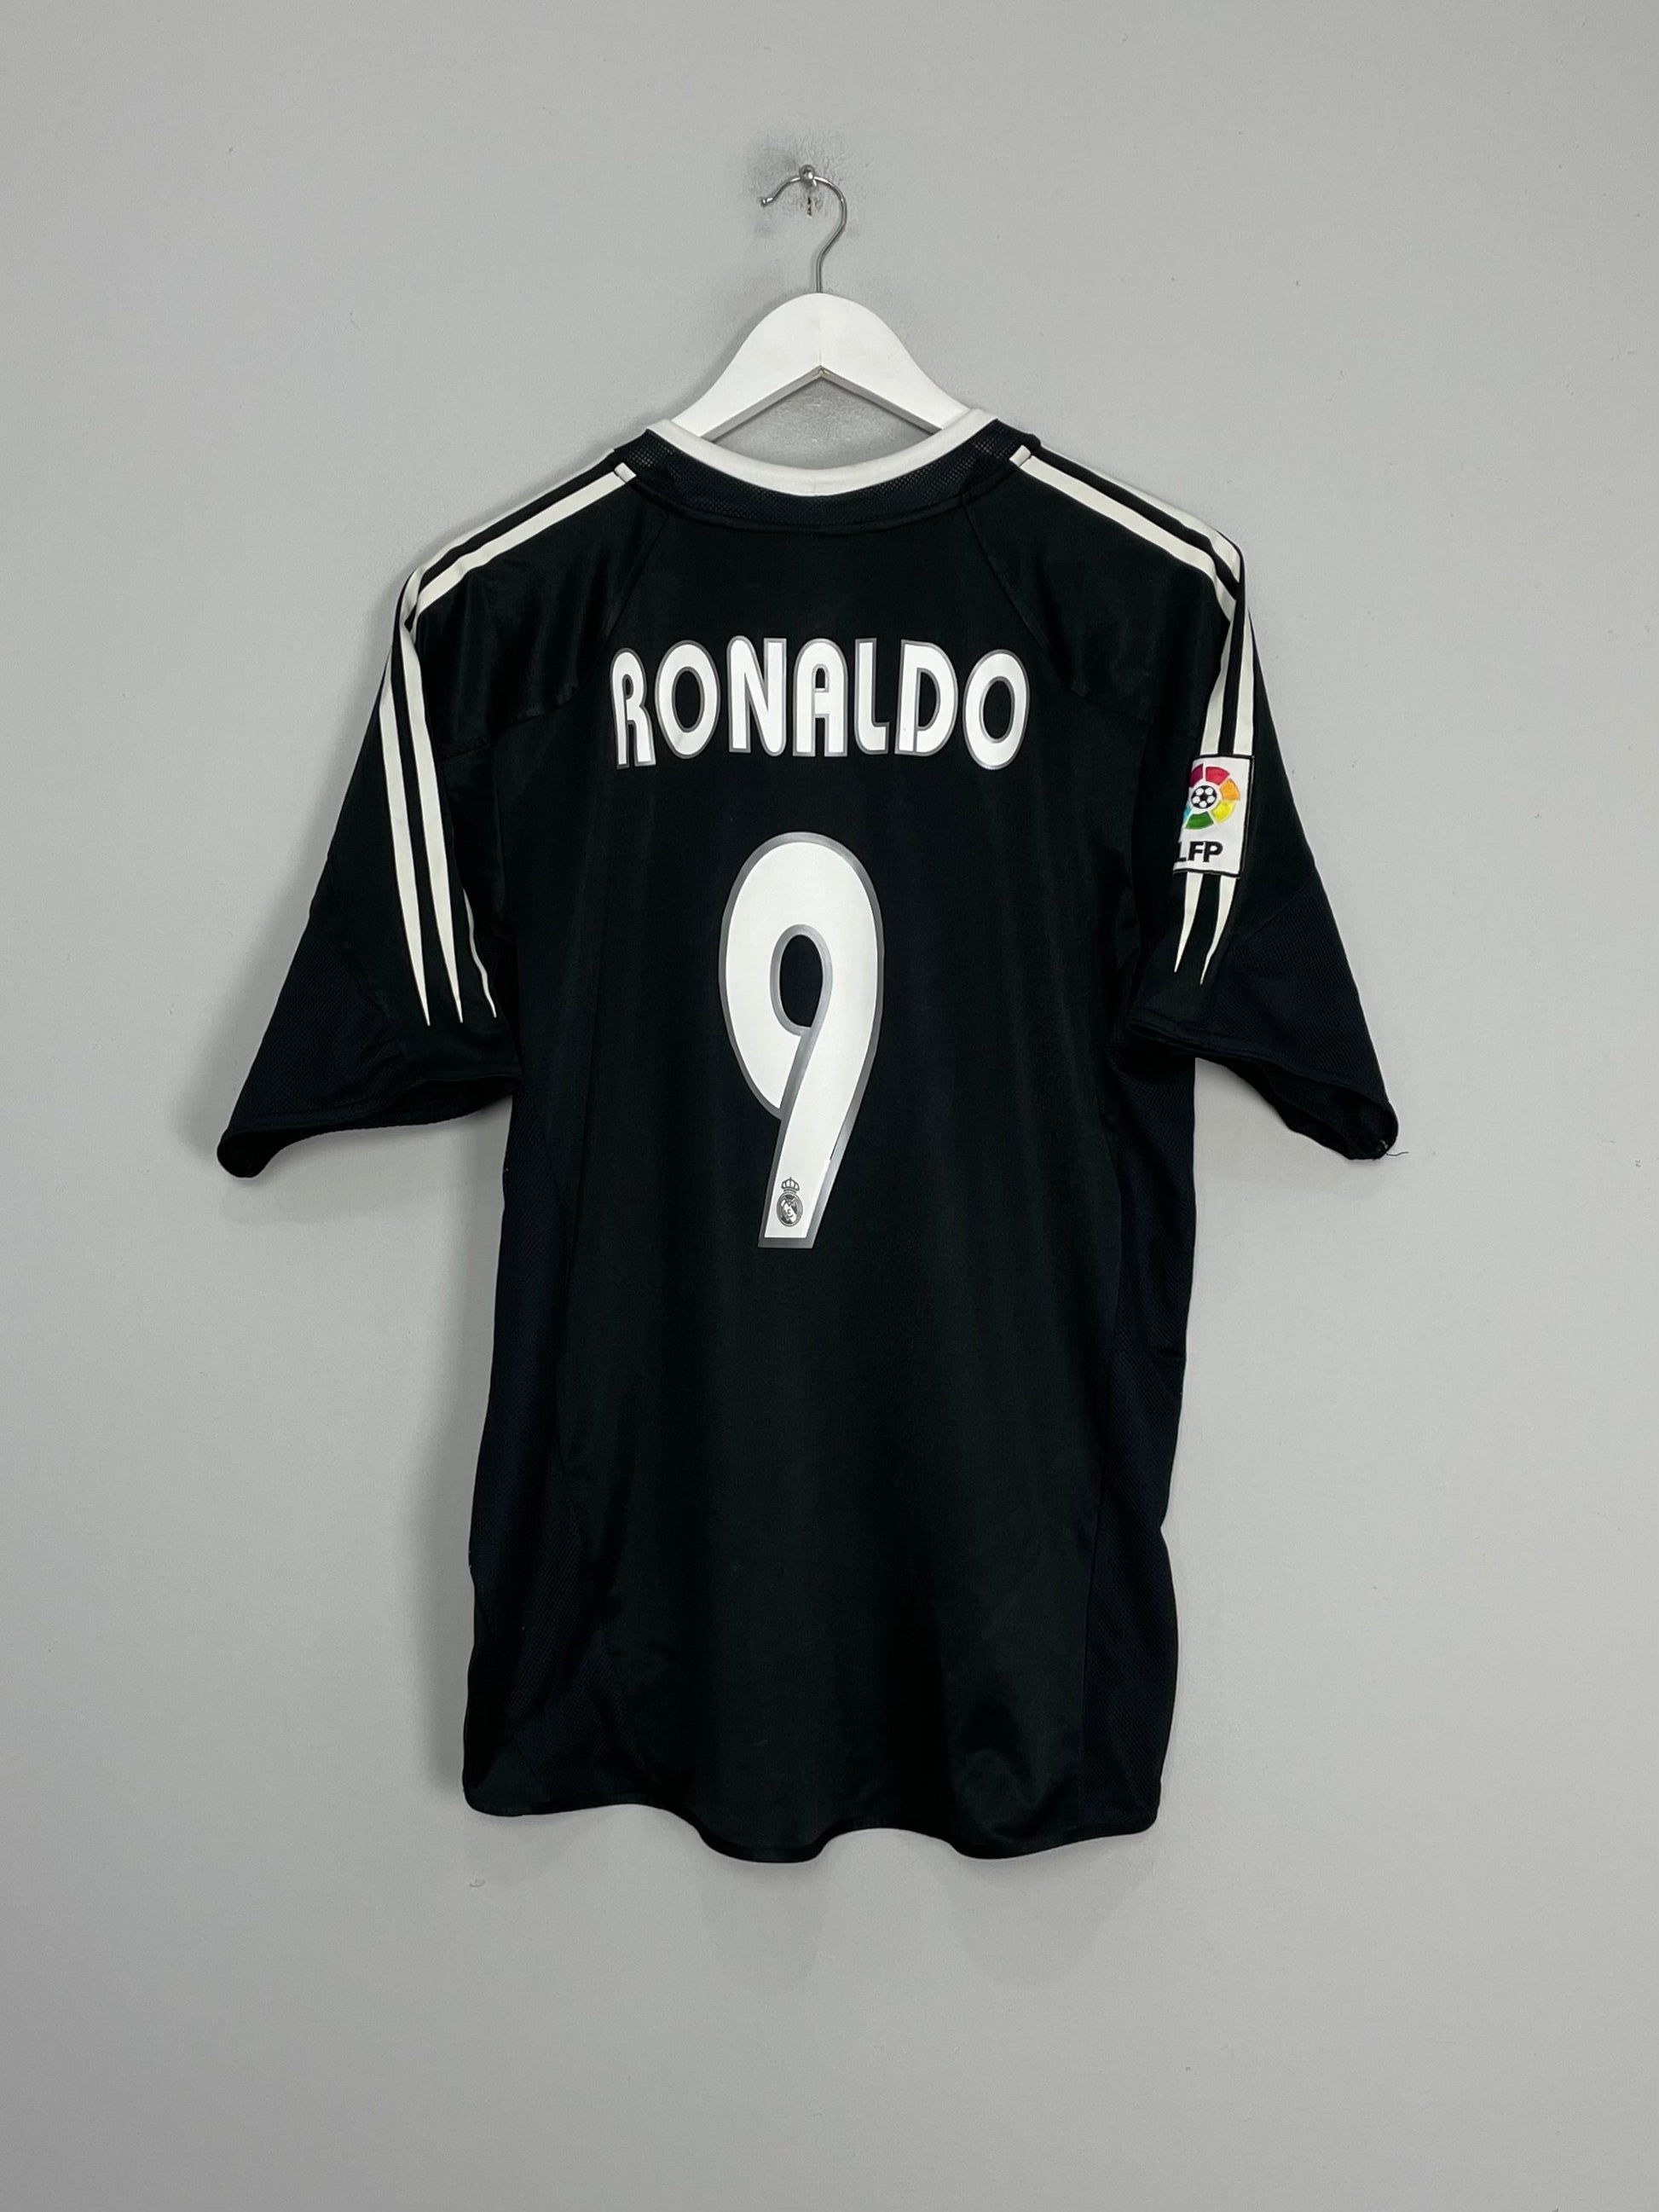 2004/05 REAL MADRID RONALDO #9 AWAY SHIRT (L) ADIDAS